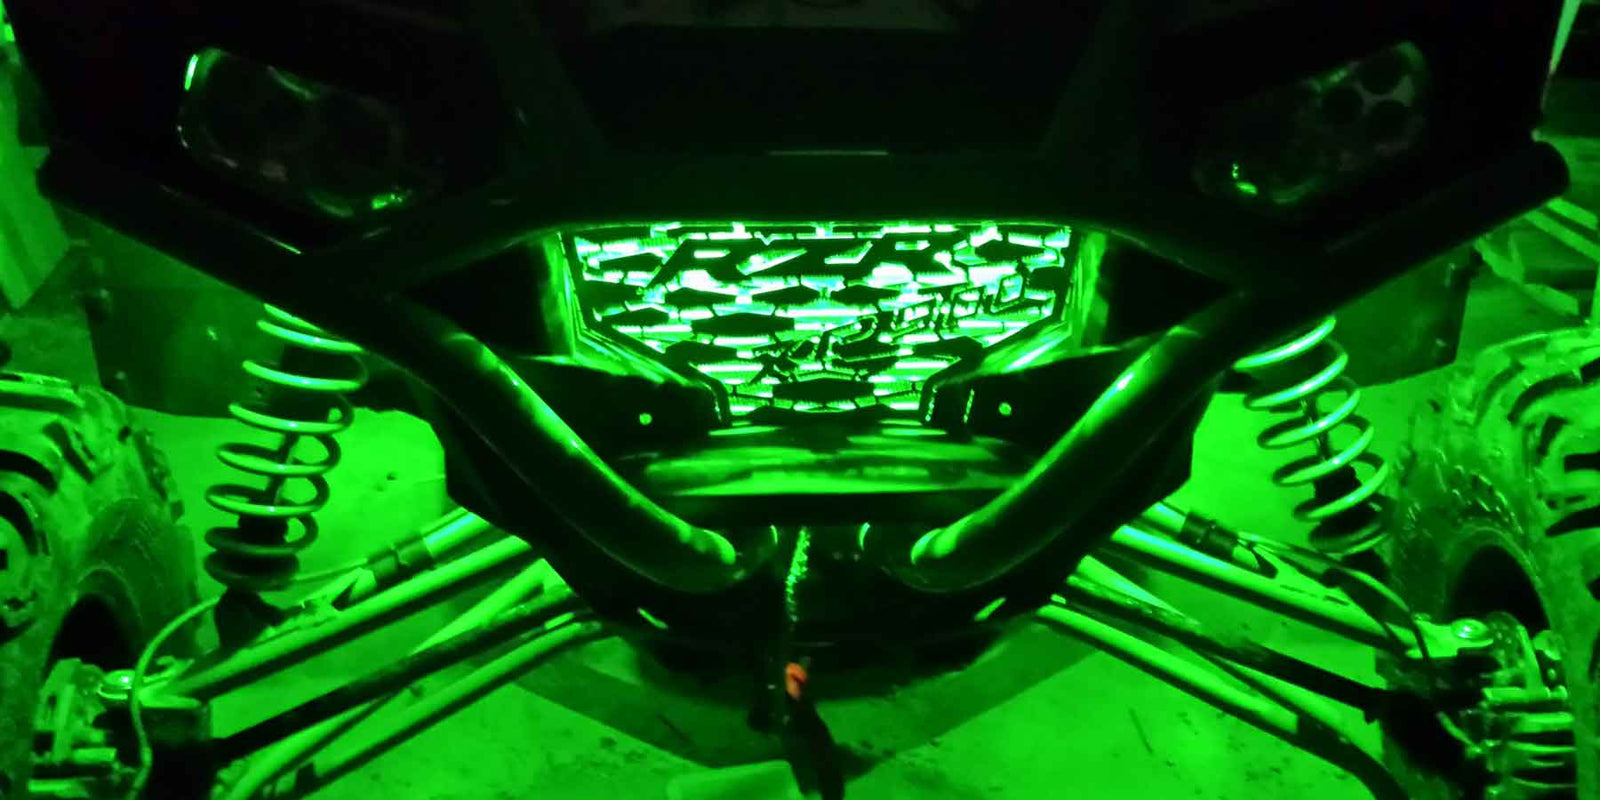 minus Plaske Had Off Road LED Lighting Products - LED Rock Lights for Jeep Rock Crawler